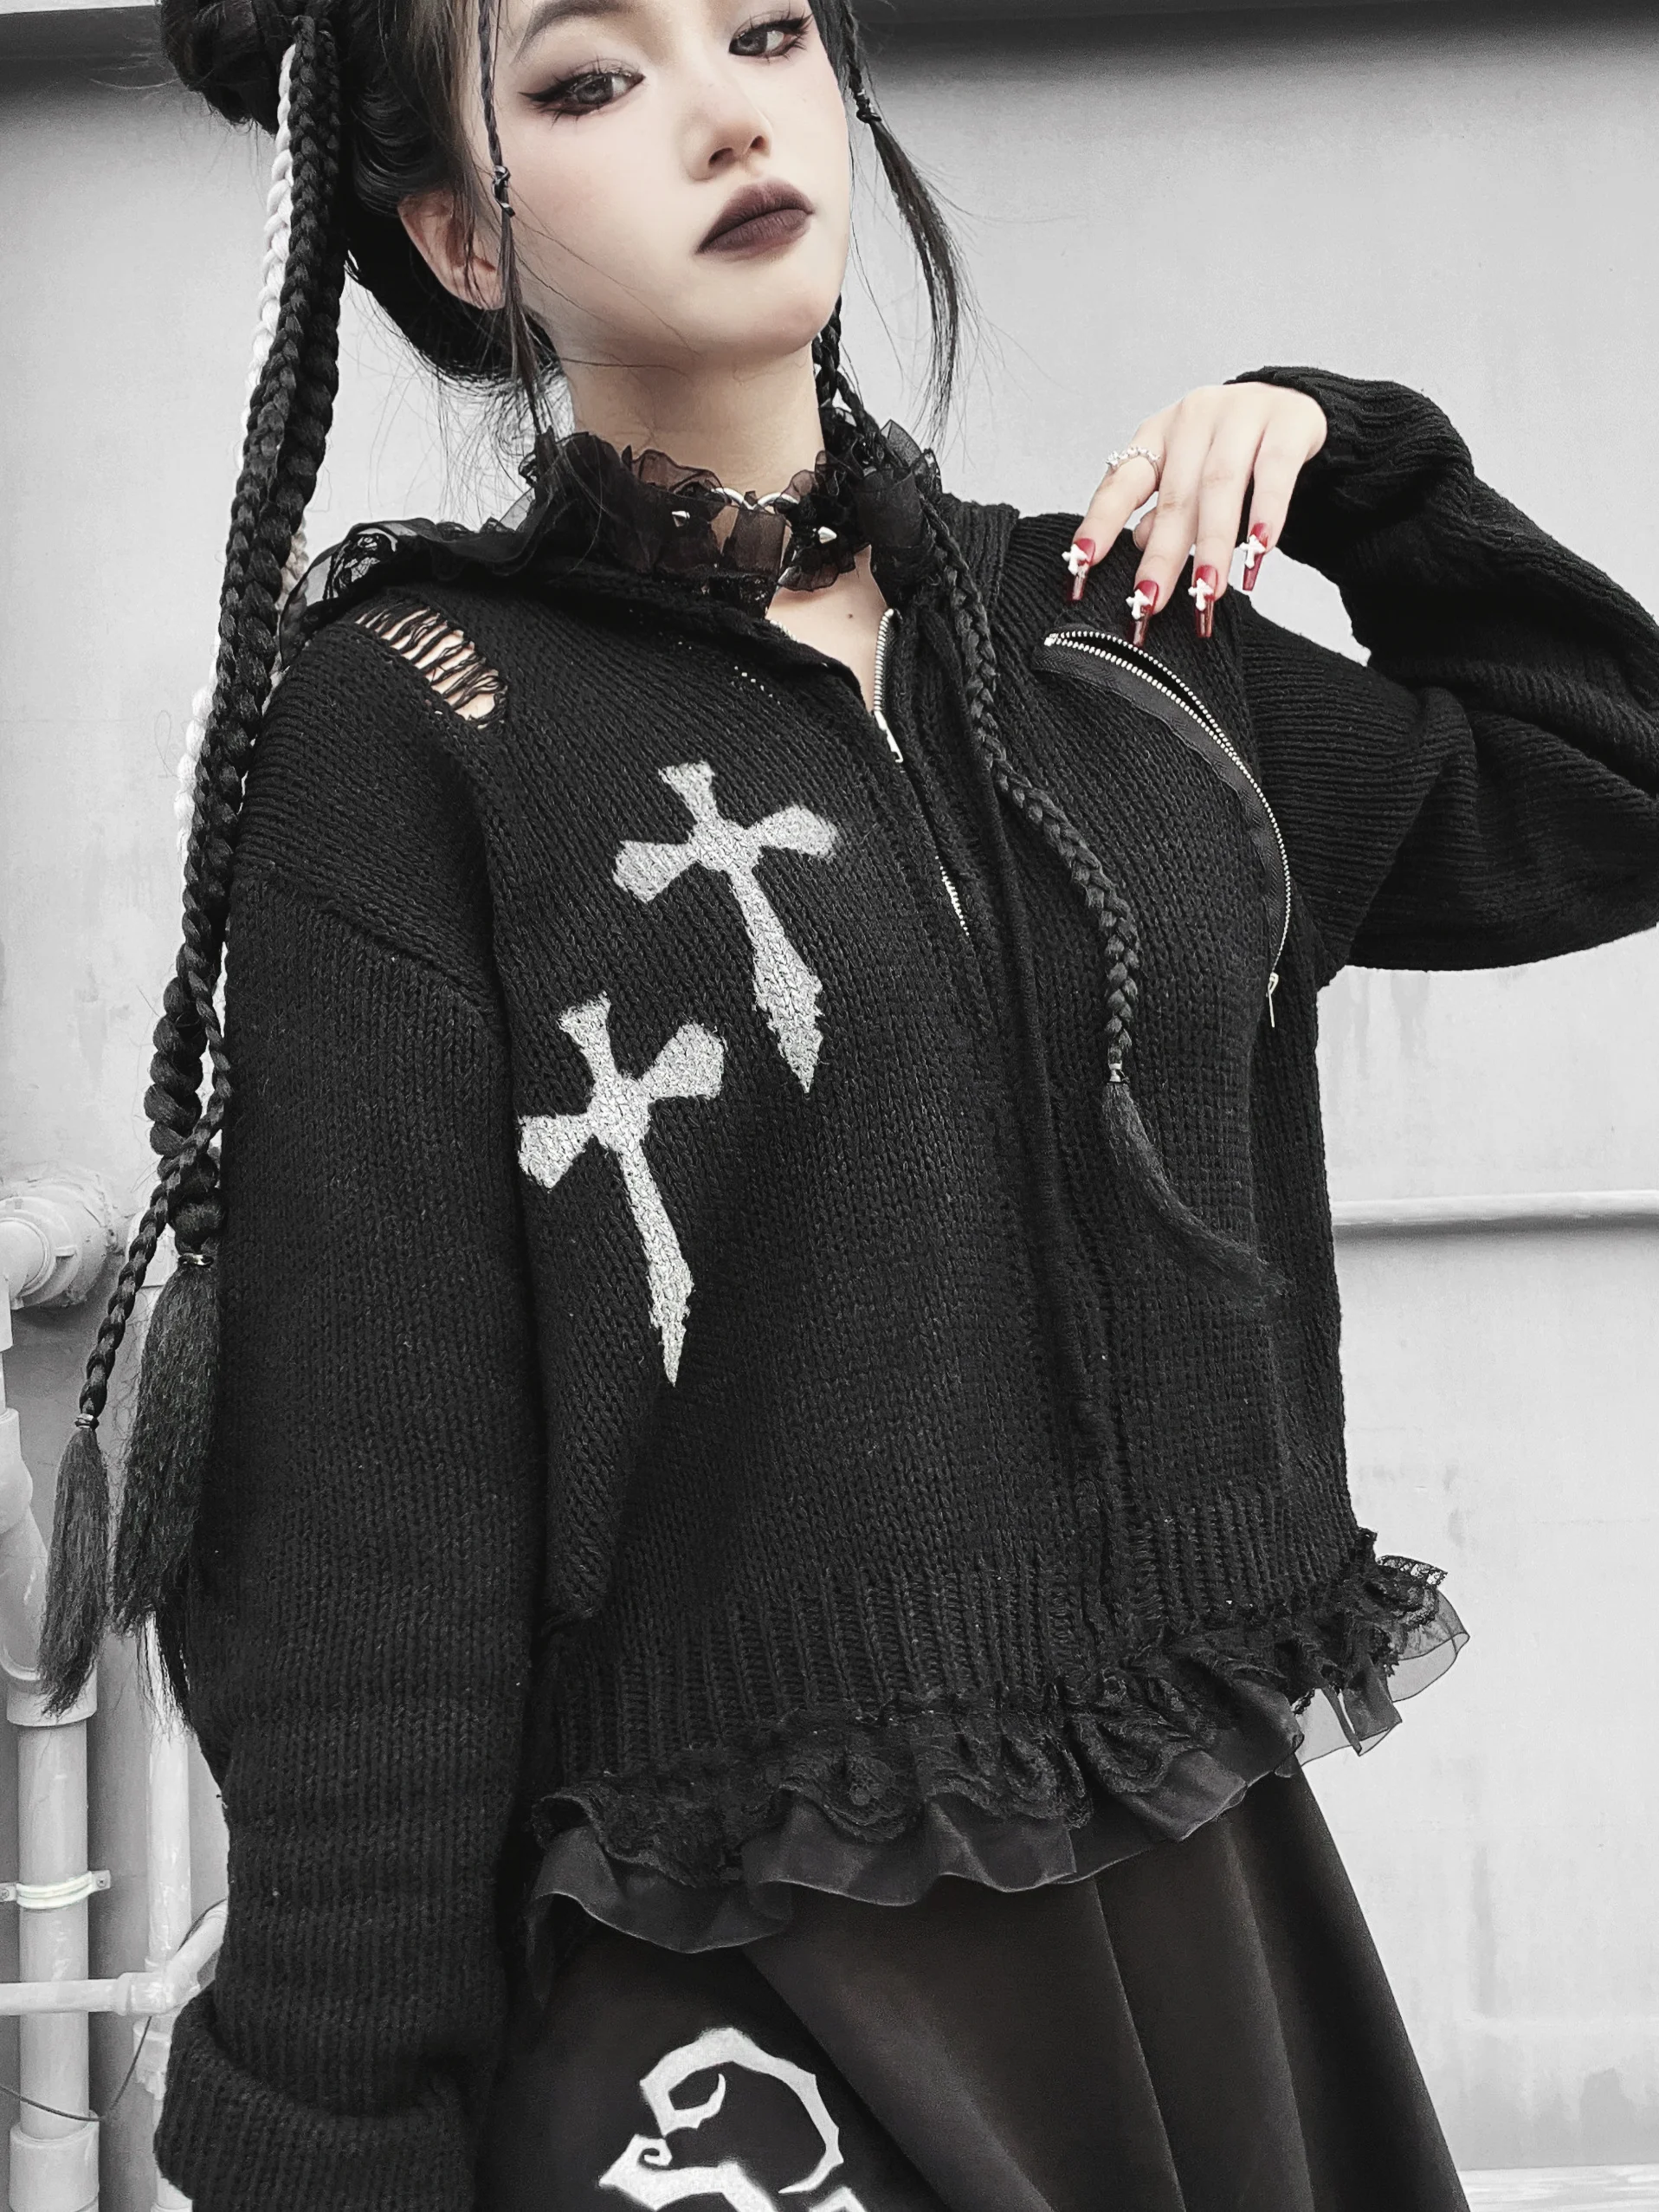 Ruibbit New Spring Autumn Women Harajuku Punk Gothic Girls Black Hoodies Hip Pop Sweatshirt Hooded Japanese Ink Jet Cross